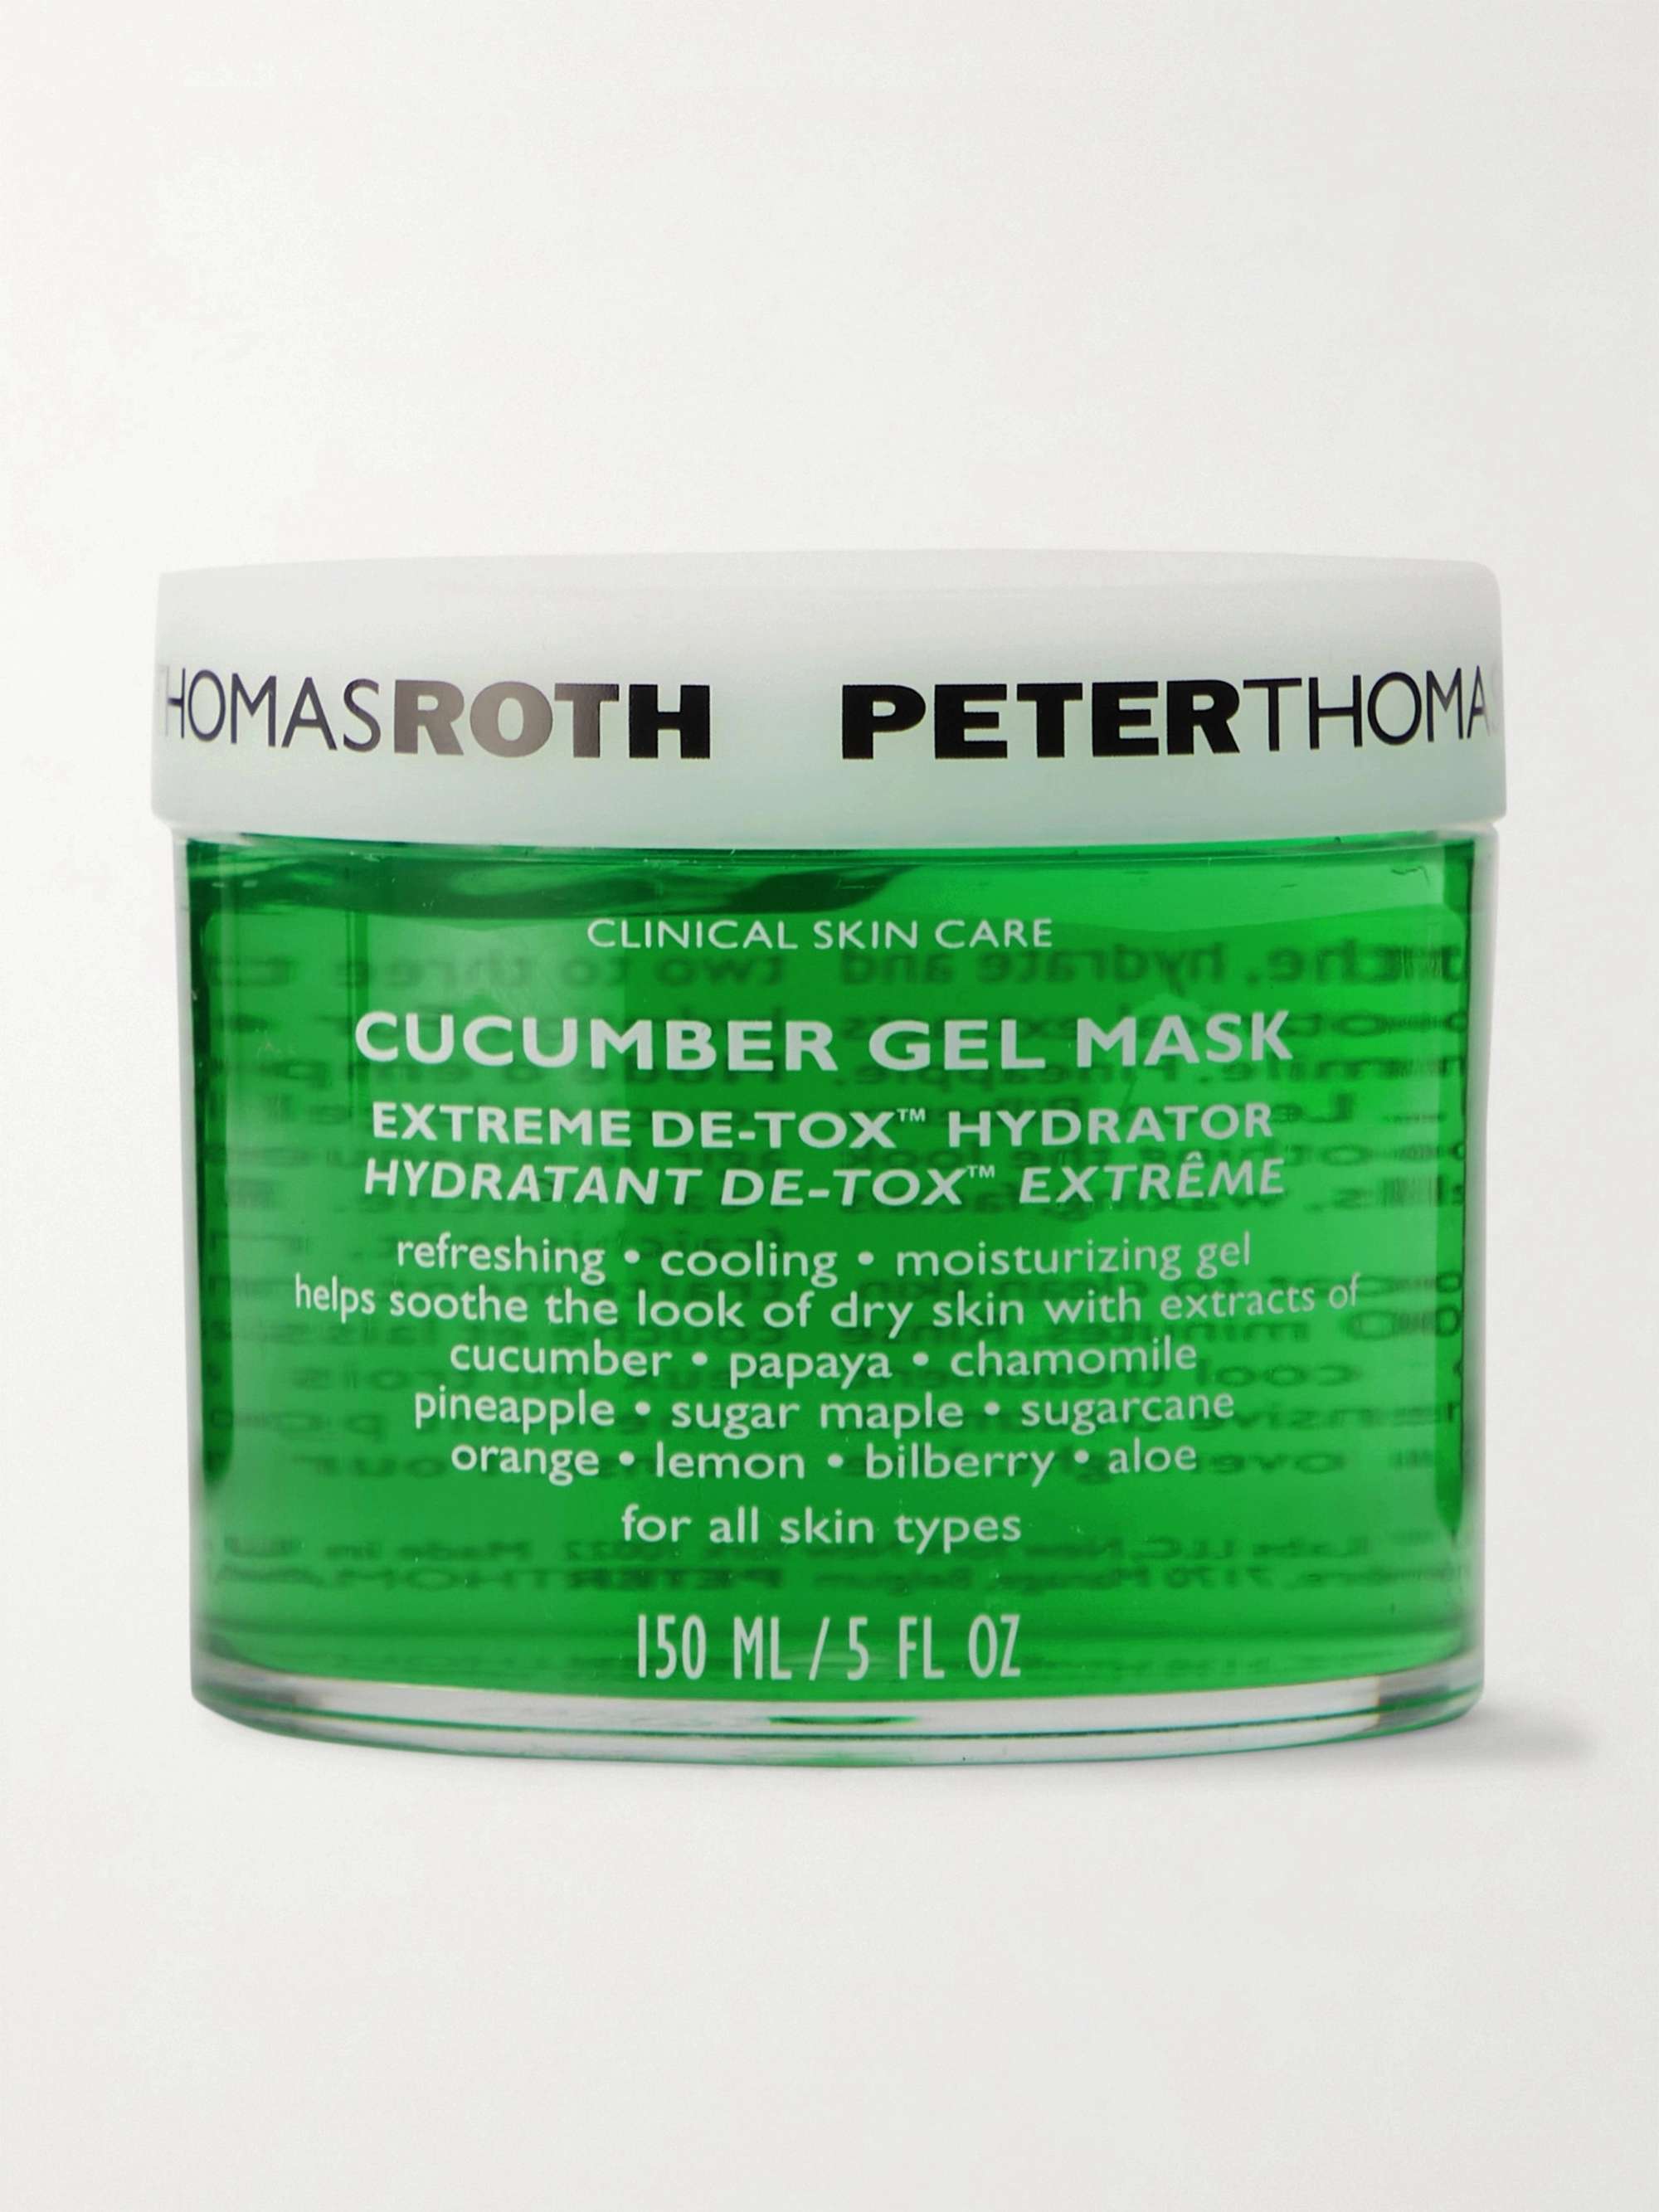 PETER THOMAS ROTH Cucumber Gel Mask Extreme De-Tox Hydrator, 150ml